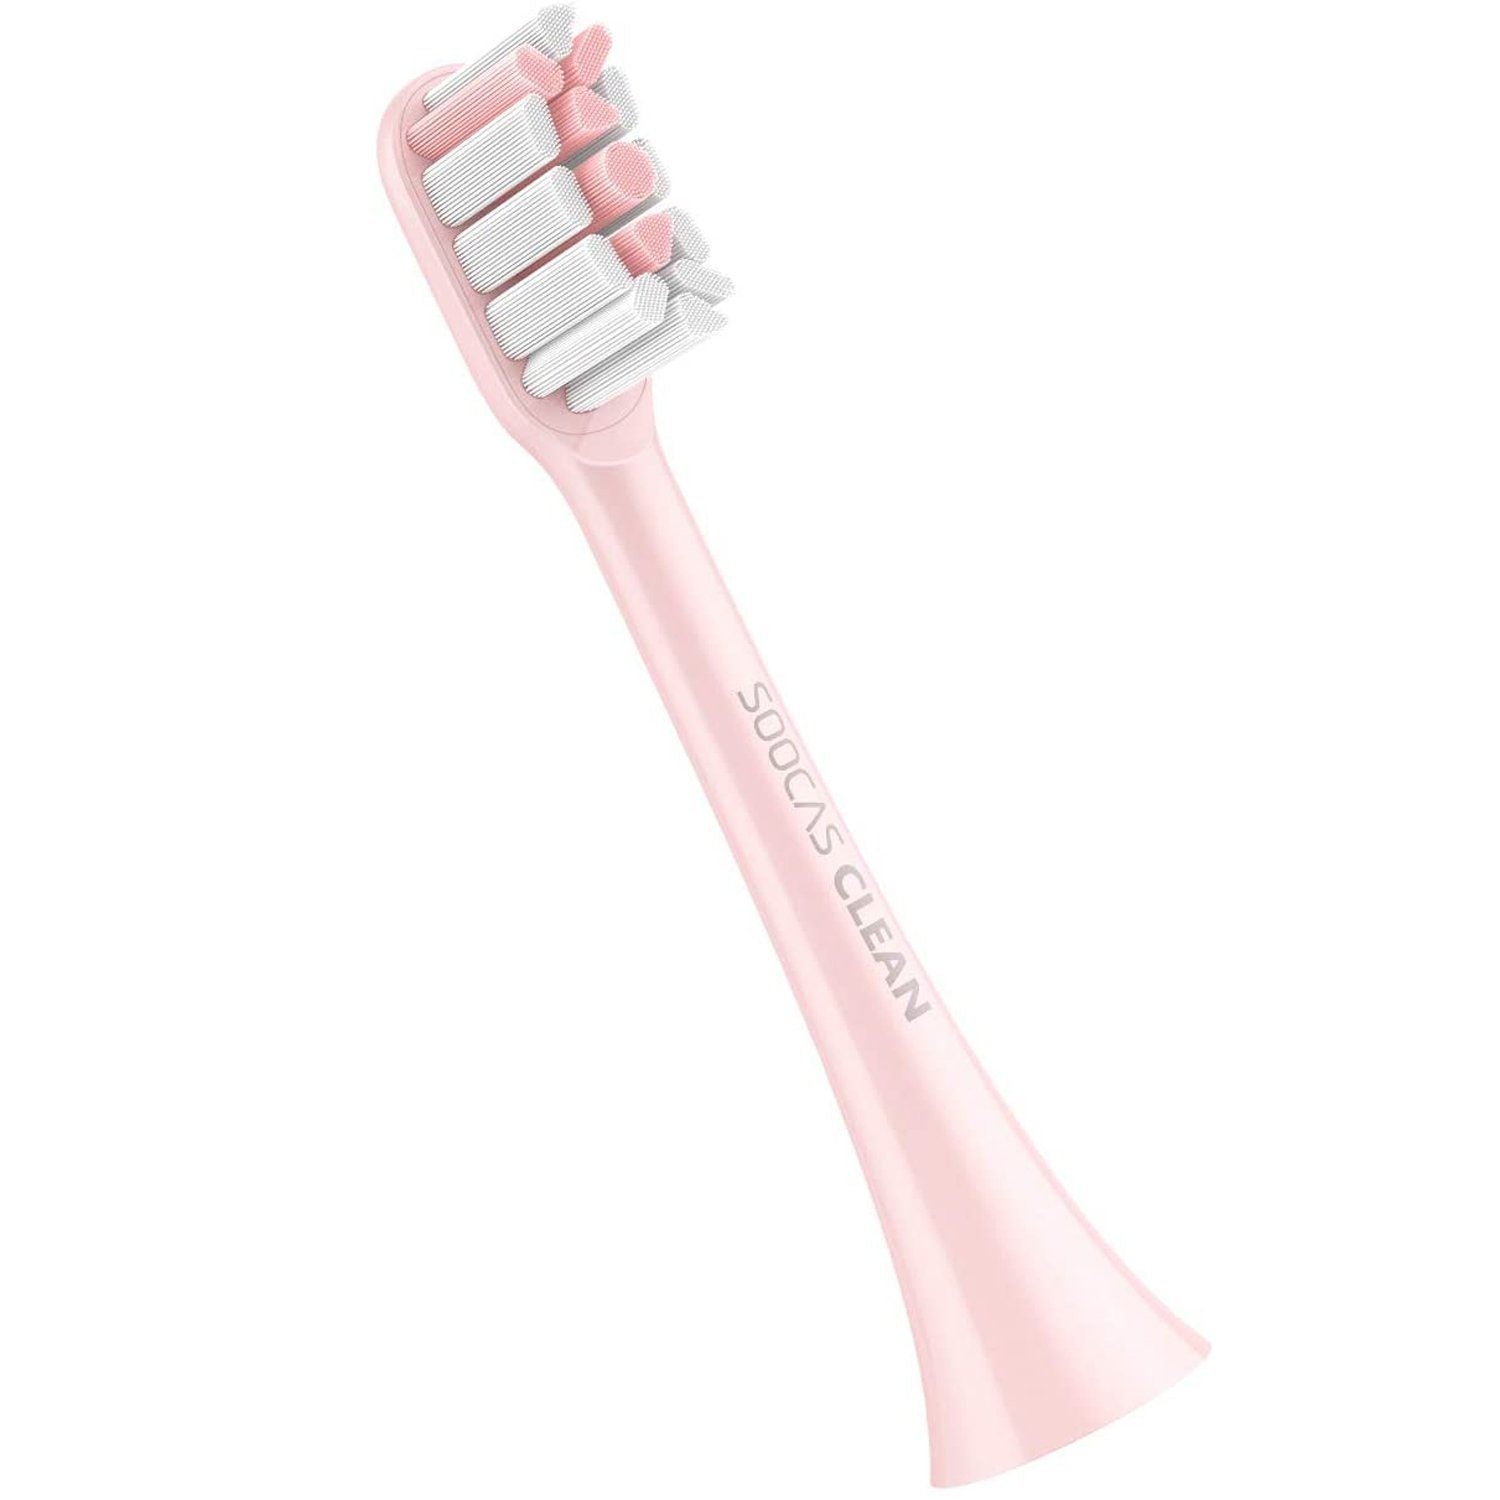 SOOCAS Original Replacement Toothbrush heads for X1/ X3U/ X5